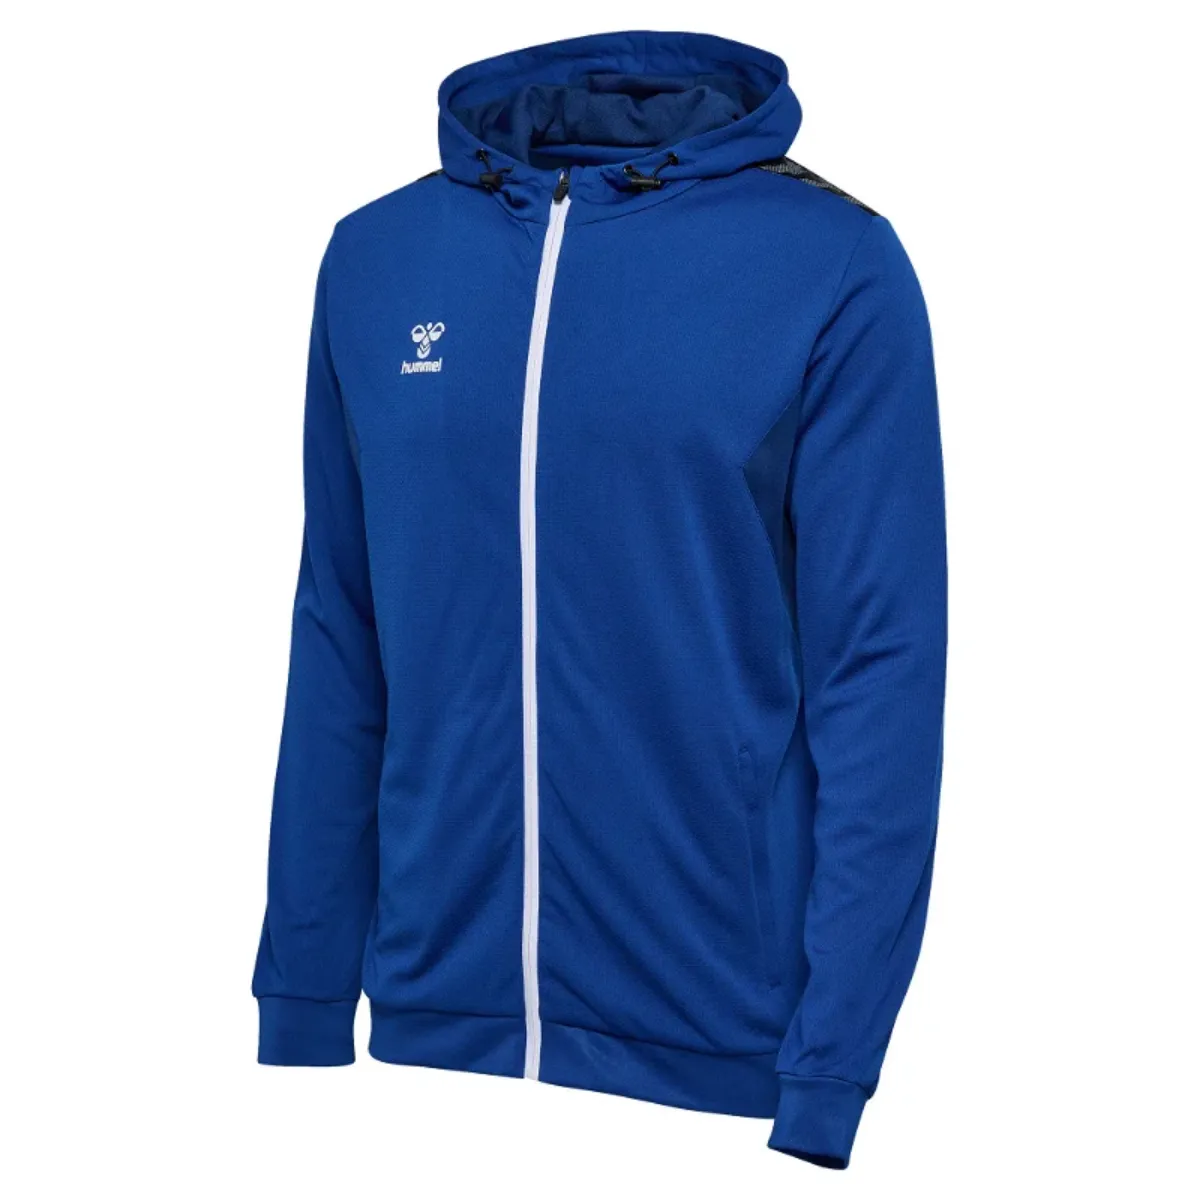 hummel-hmlauthentic-pl-zip-hoodie-true-blue